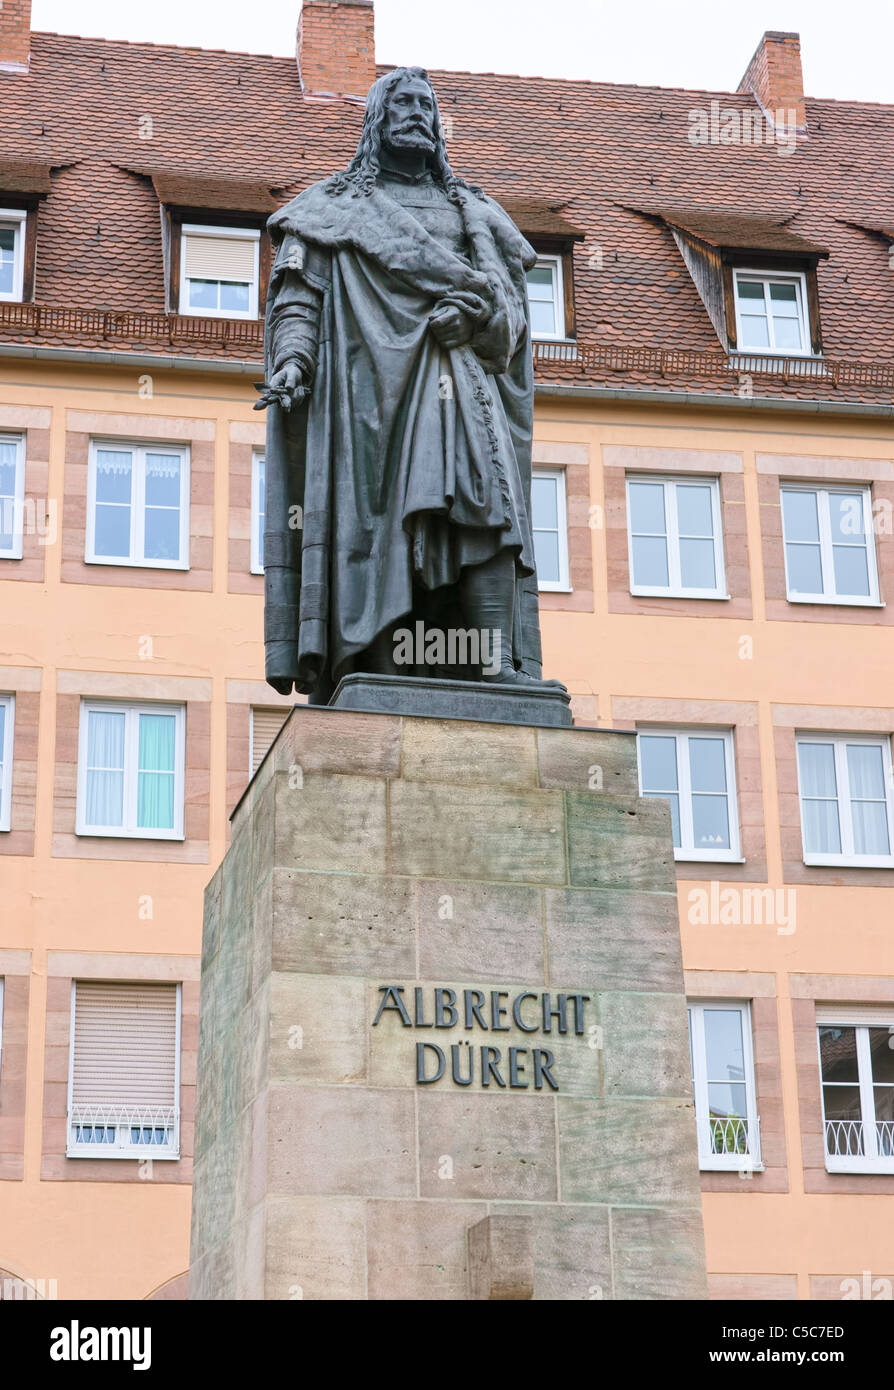 Albrecht Dürer sculpture Nuremberg Bavaria Germany Stock Photo